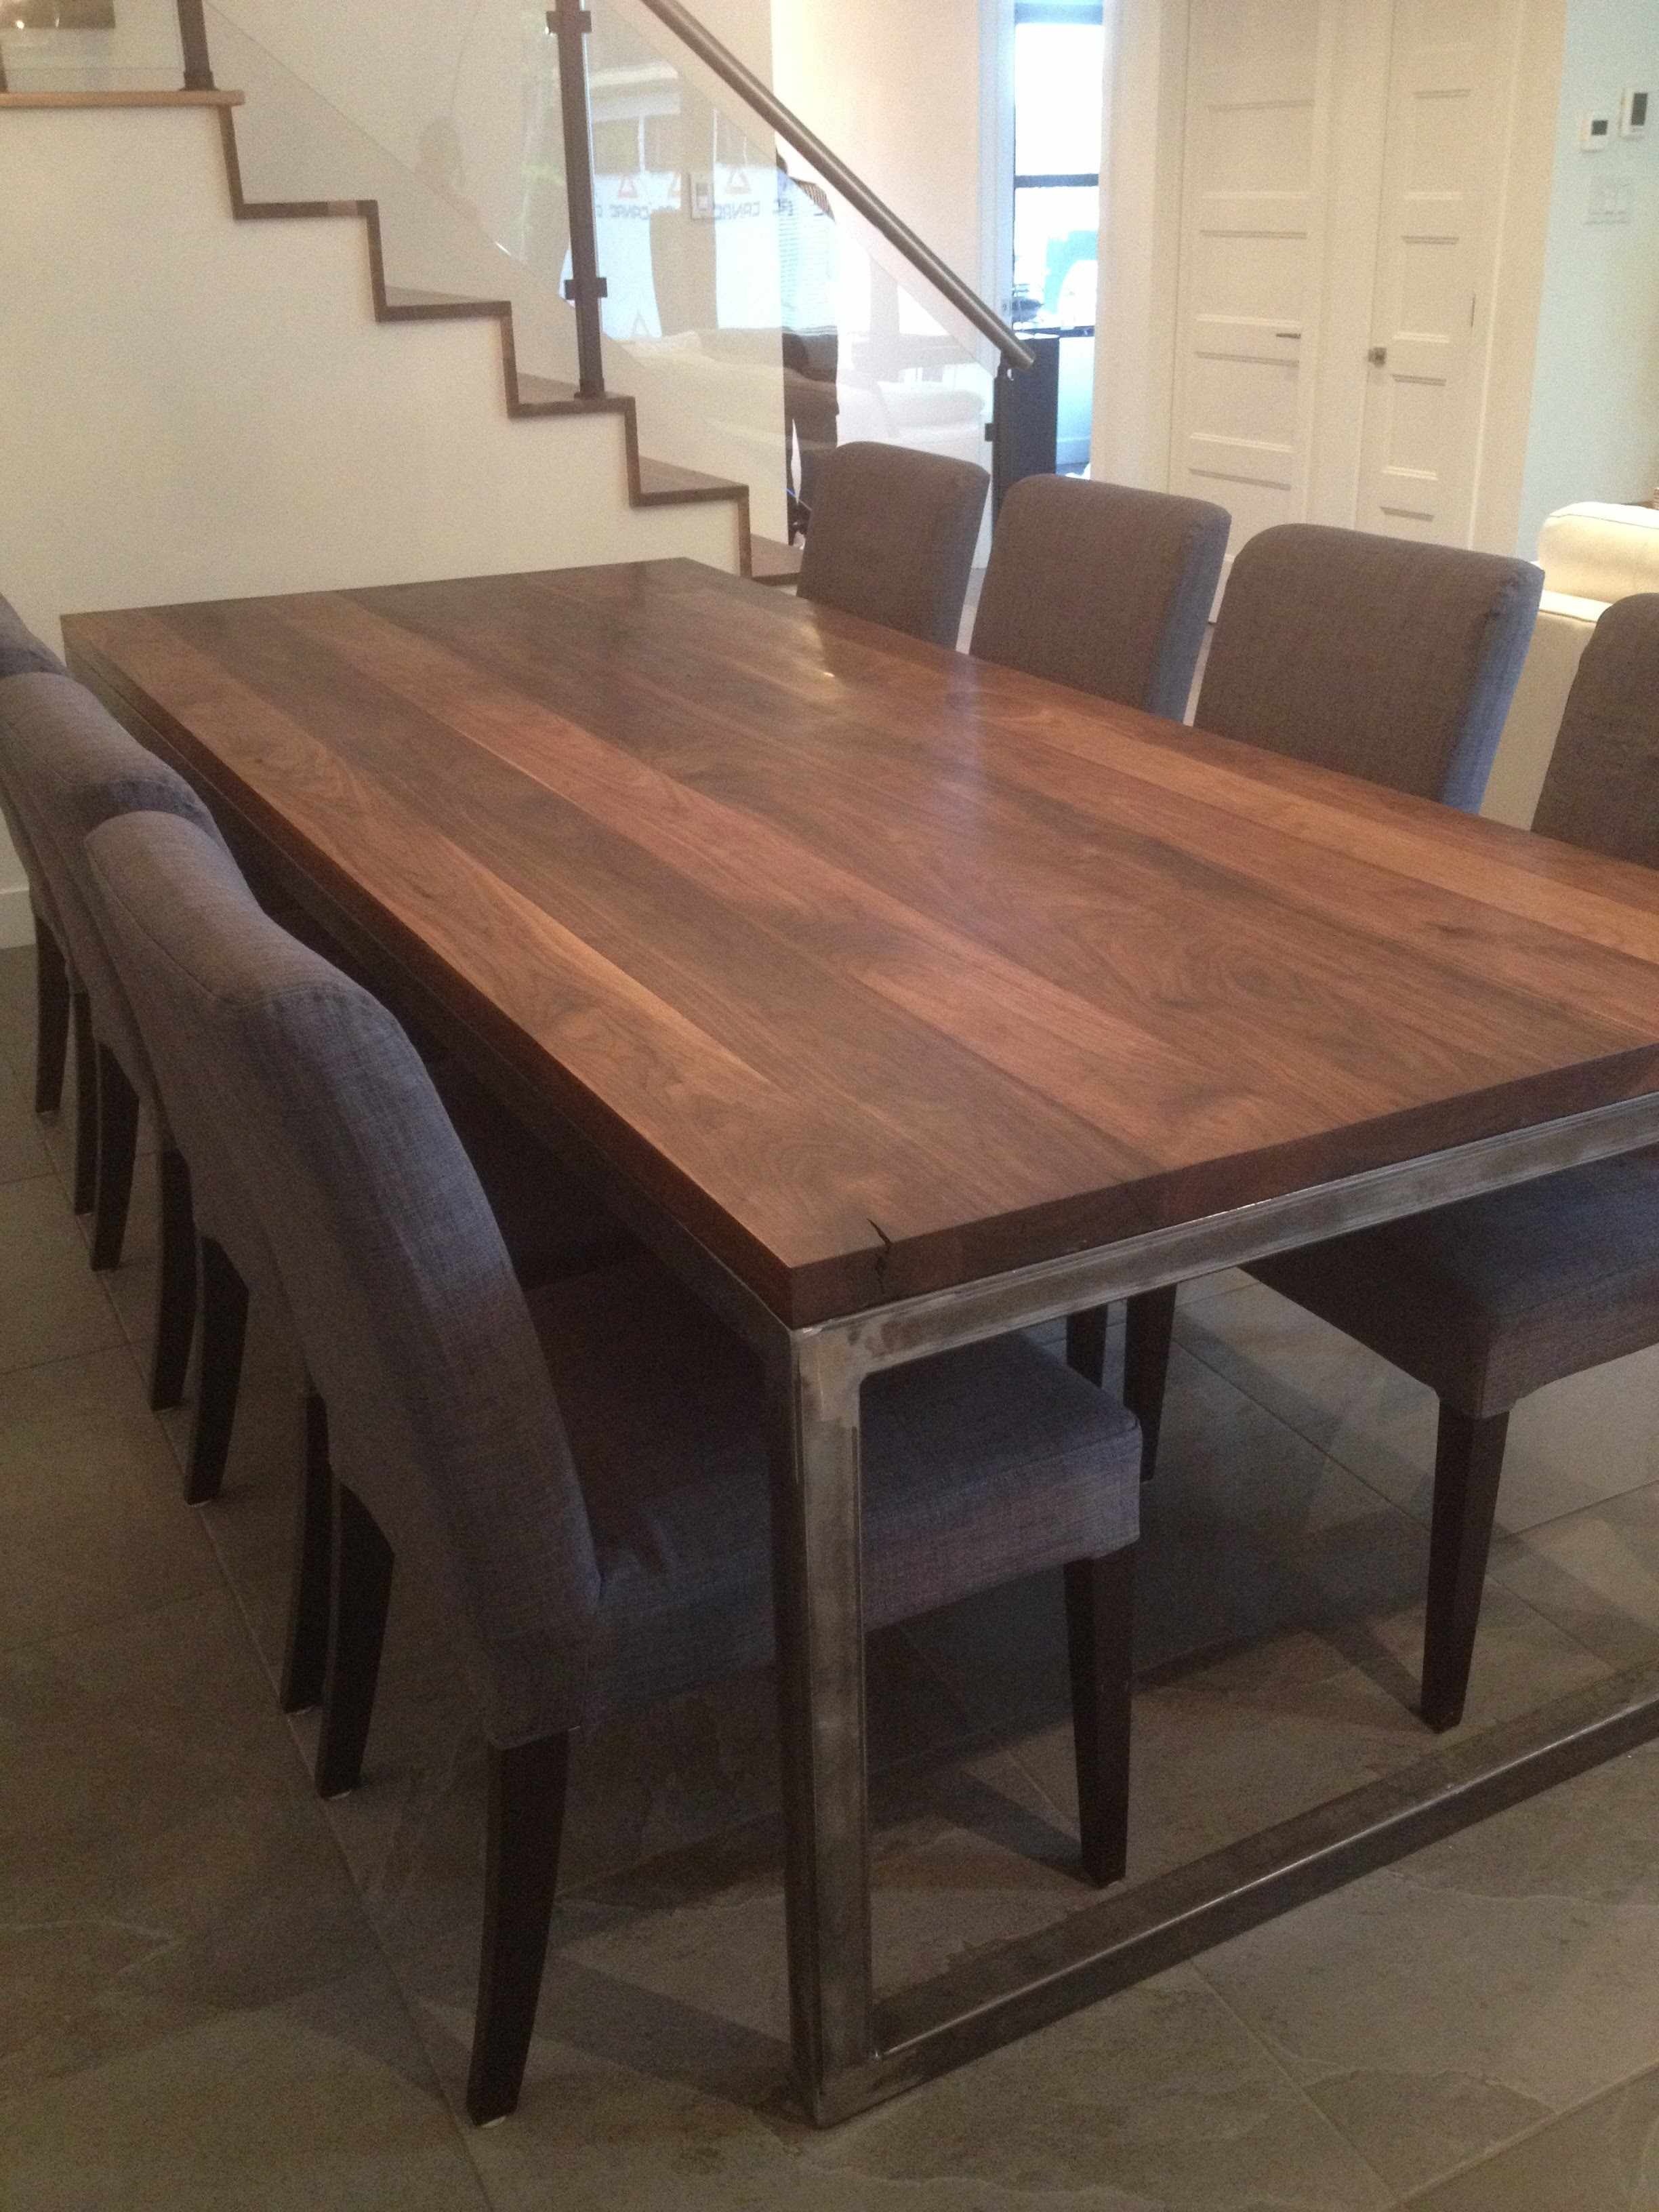 Live edge black walnut dining table — Bois & Design - custom made